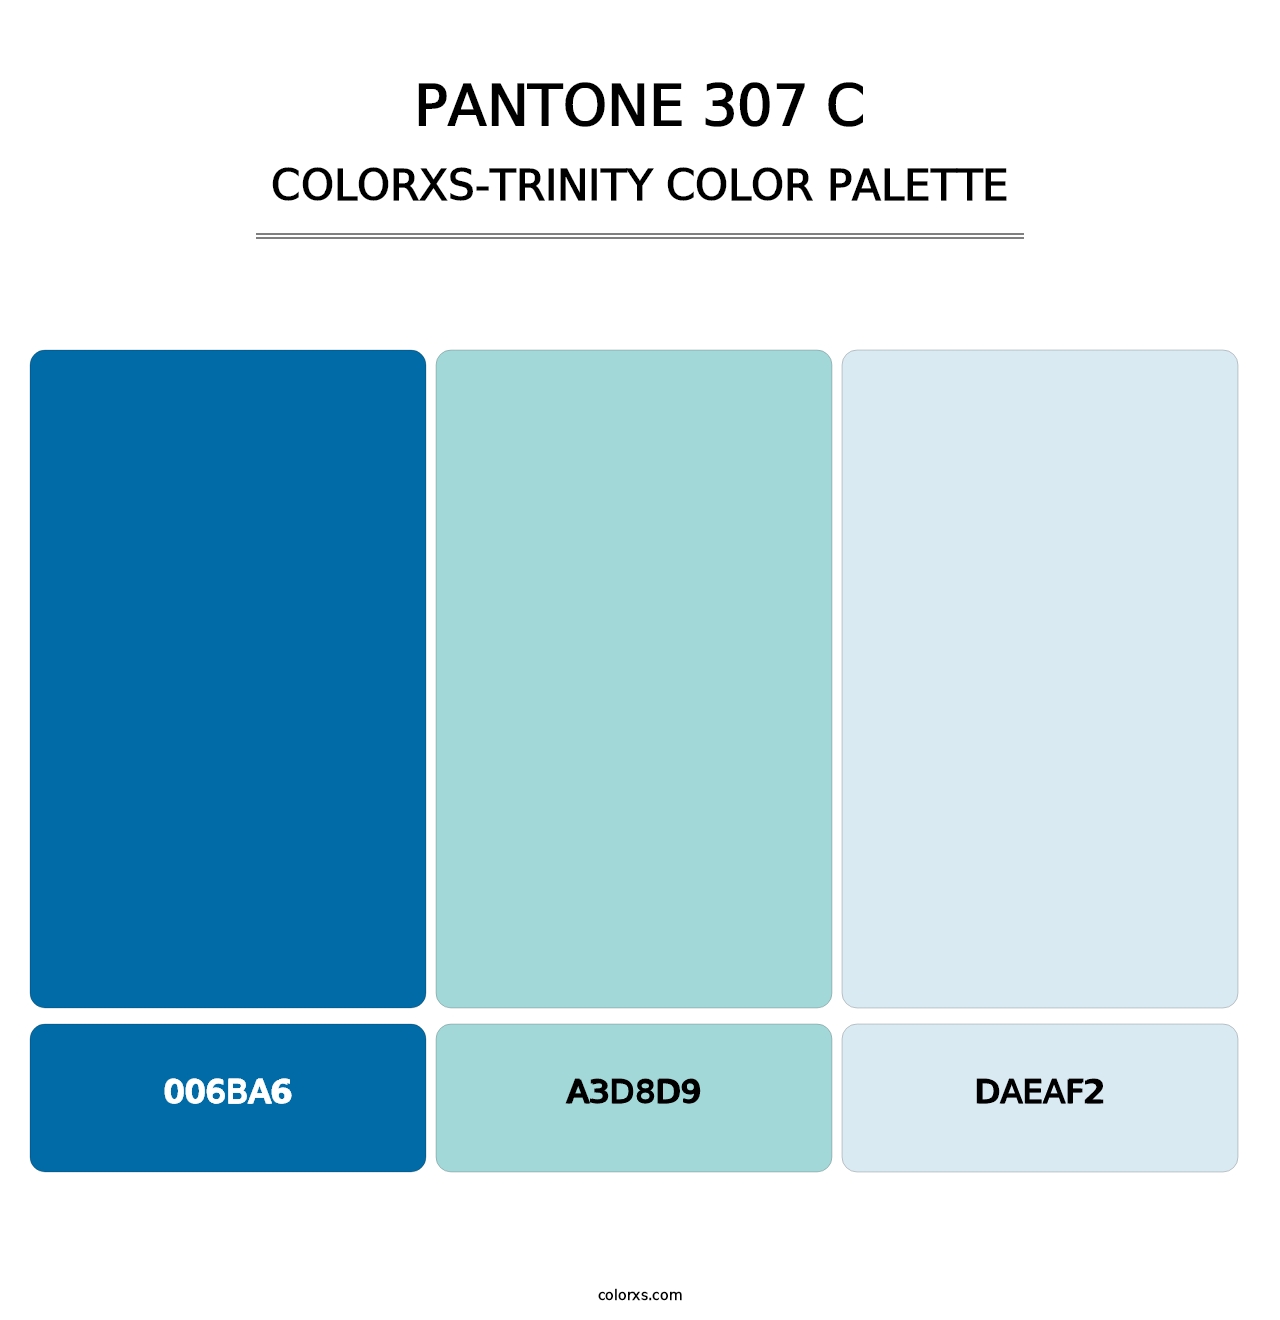 PANTONE 307 C - Colorxs Trinity Palette